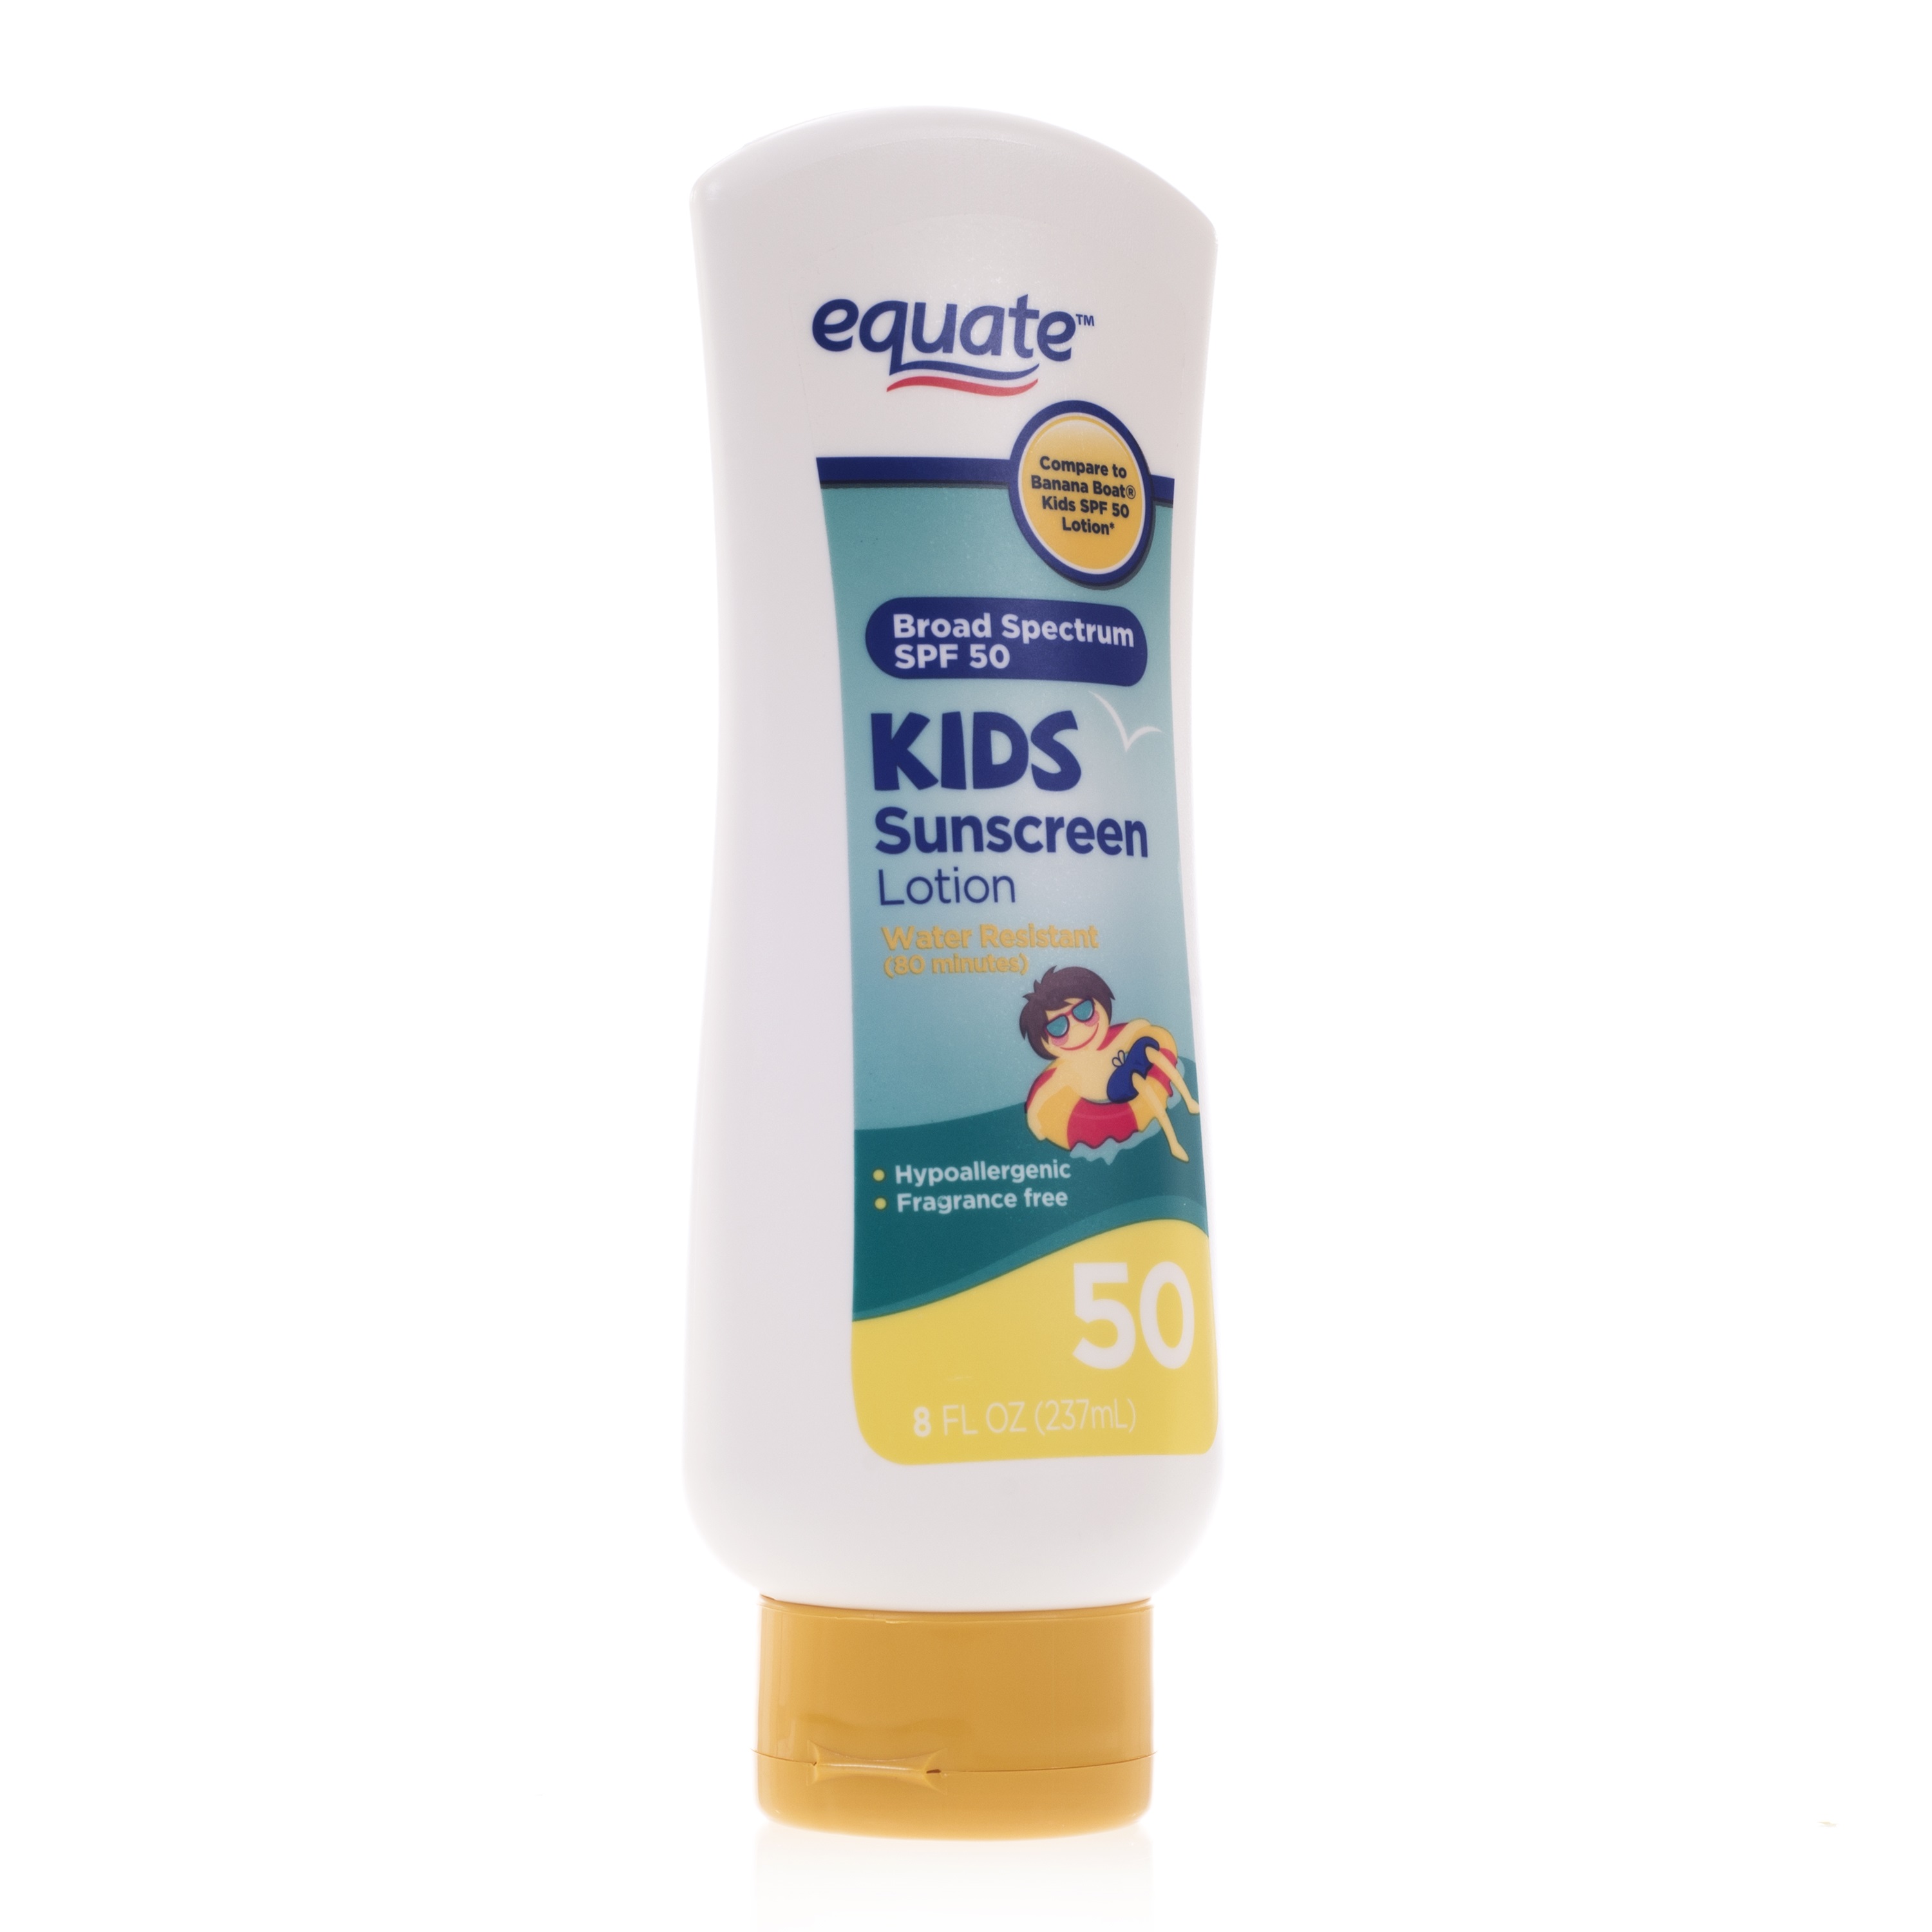 Equate Kids Sunscreen Lotion, SPF 50, 8 fl oz - image 2 of 3